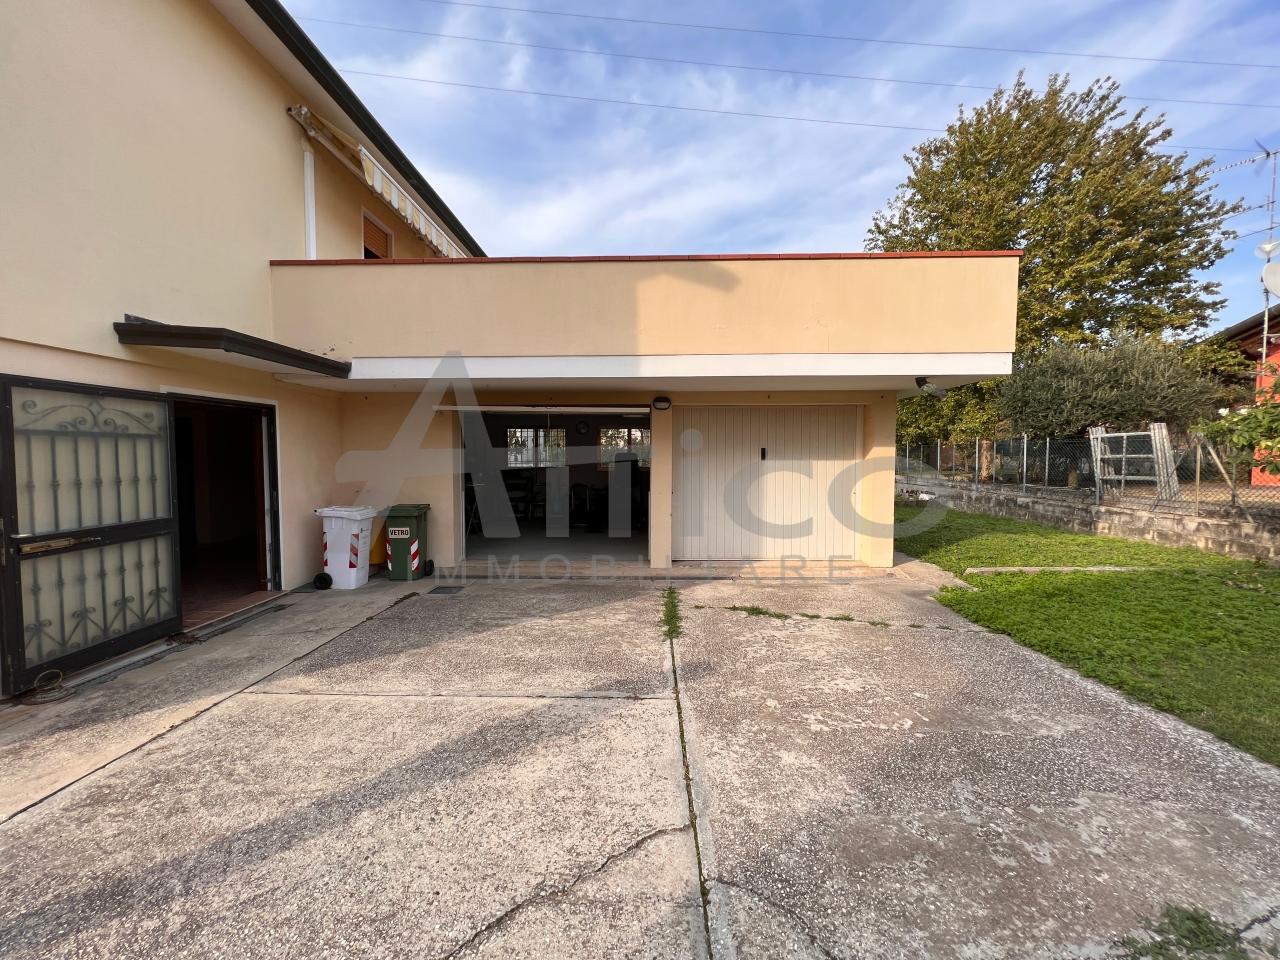 Casa indipendente in vendita a Pontecchio Polesine